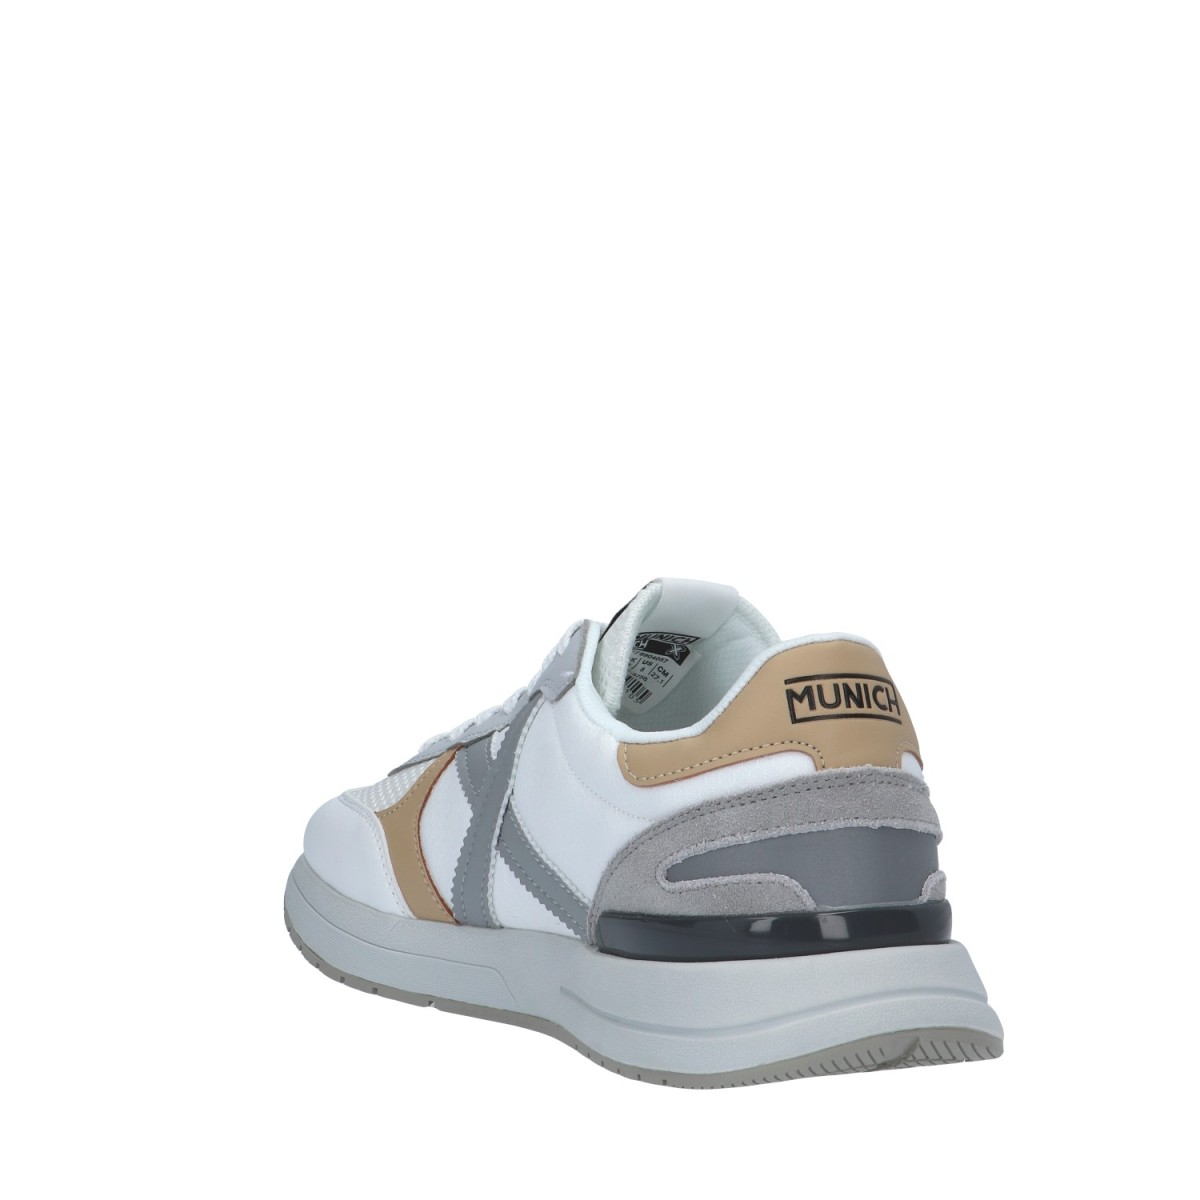 Munich Sneaker Bianco/grigio Gomma 8904057